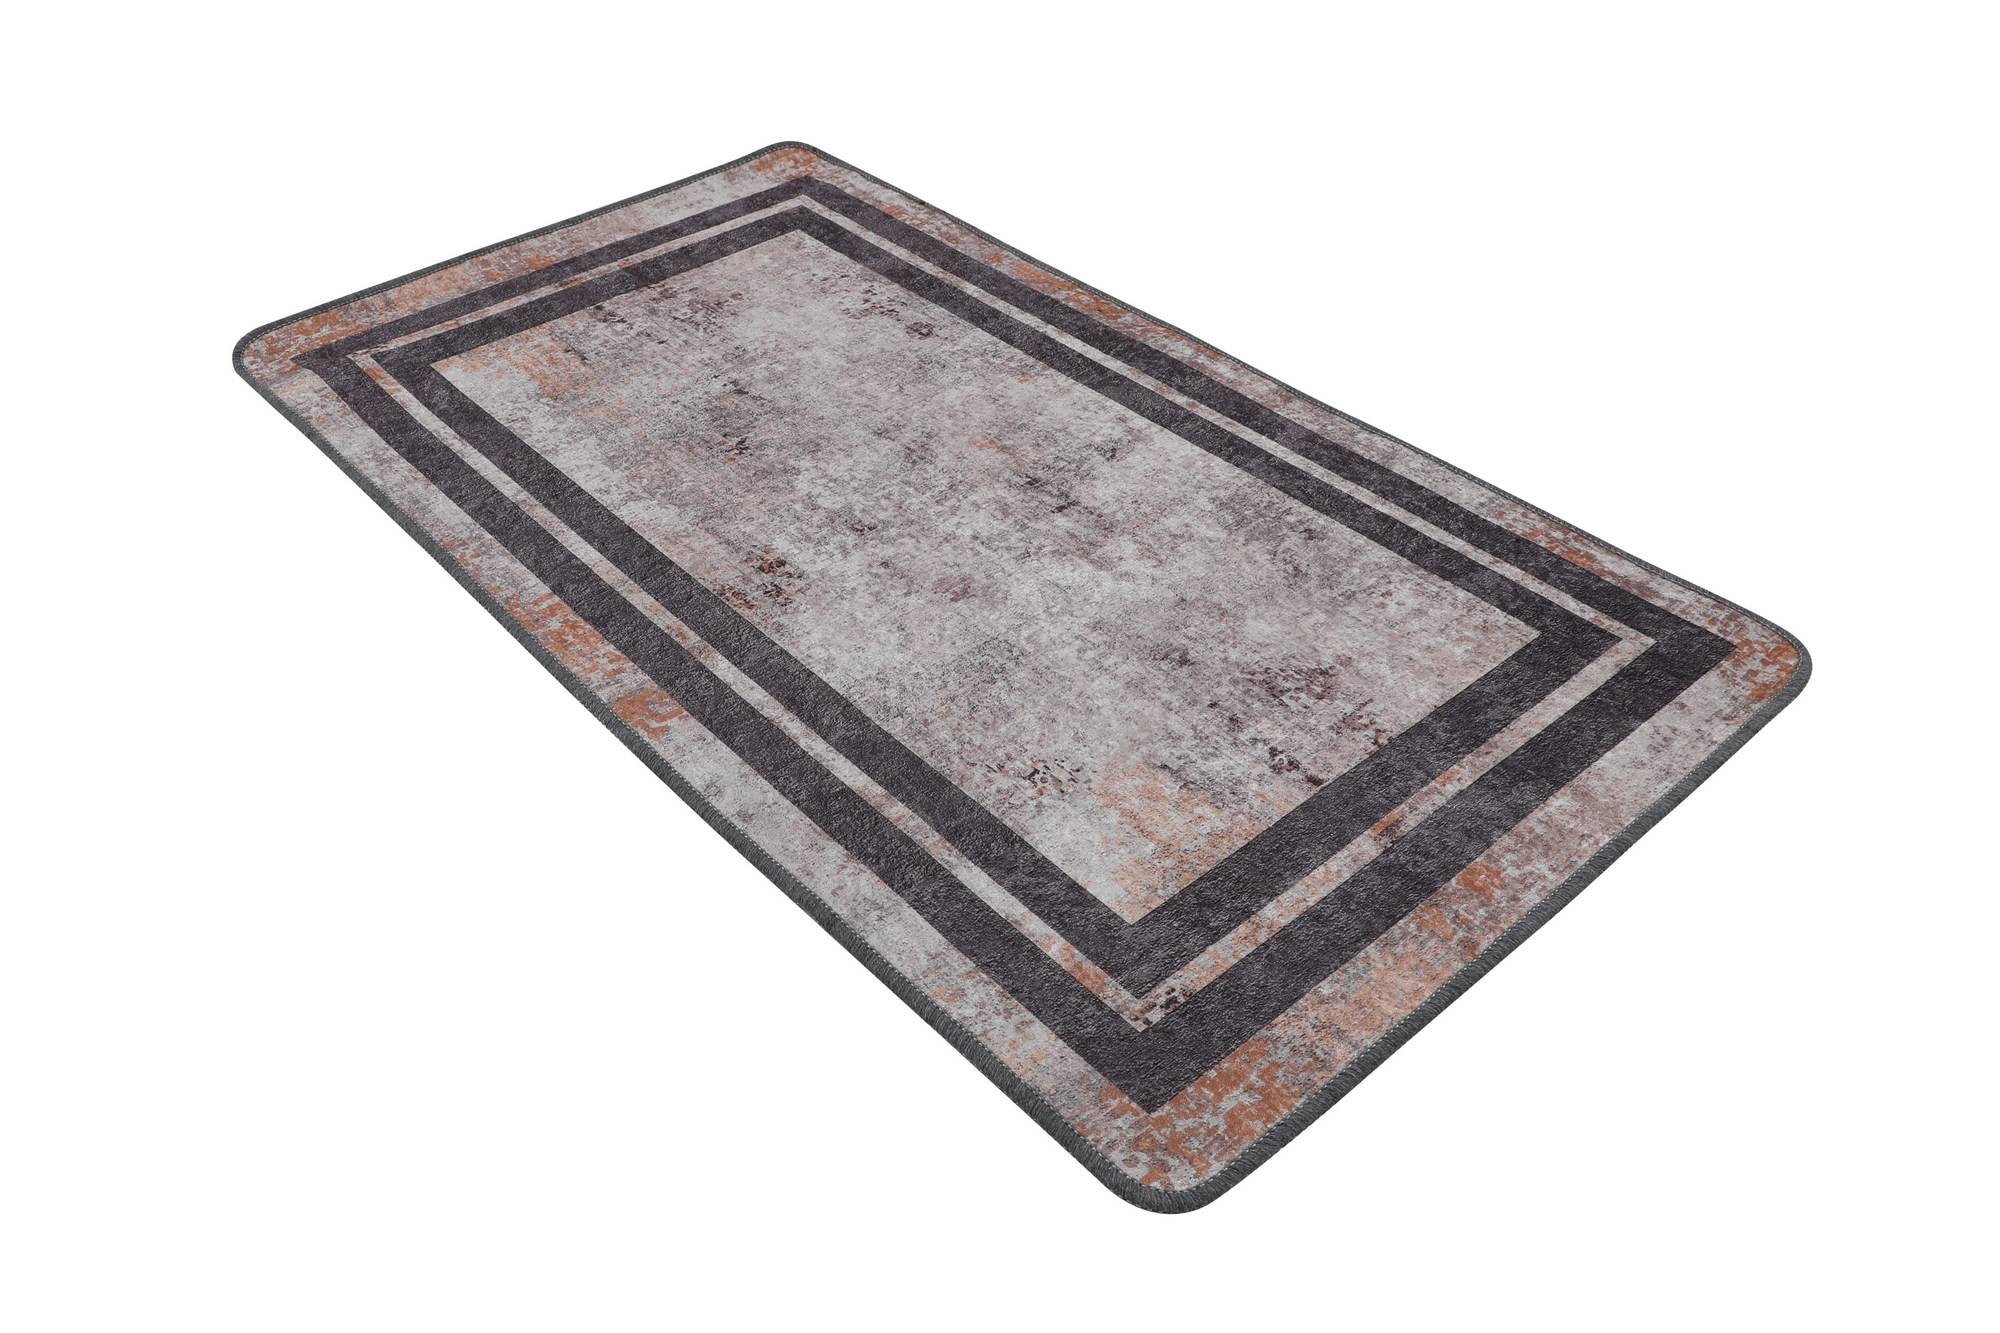 Badkamer tapijt Pekar 70x120cm Roest structuur Rechthoeken patroon Donker bruin